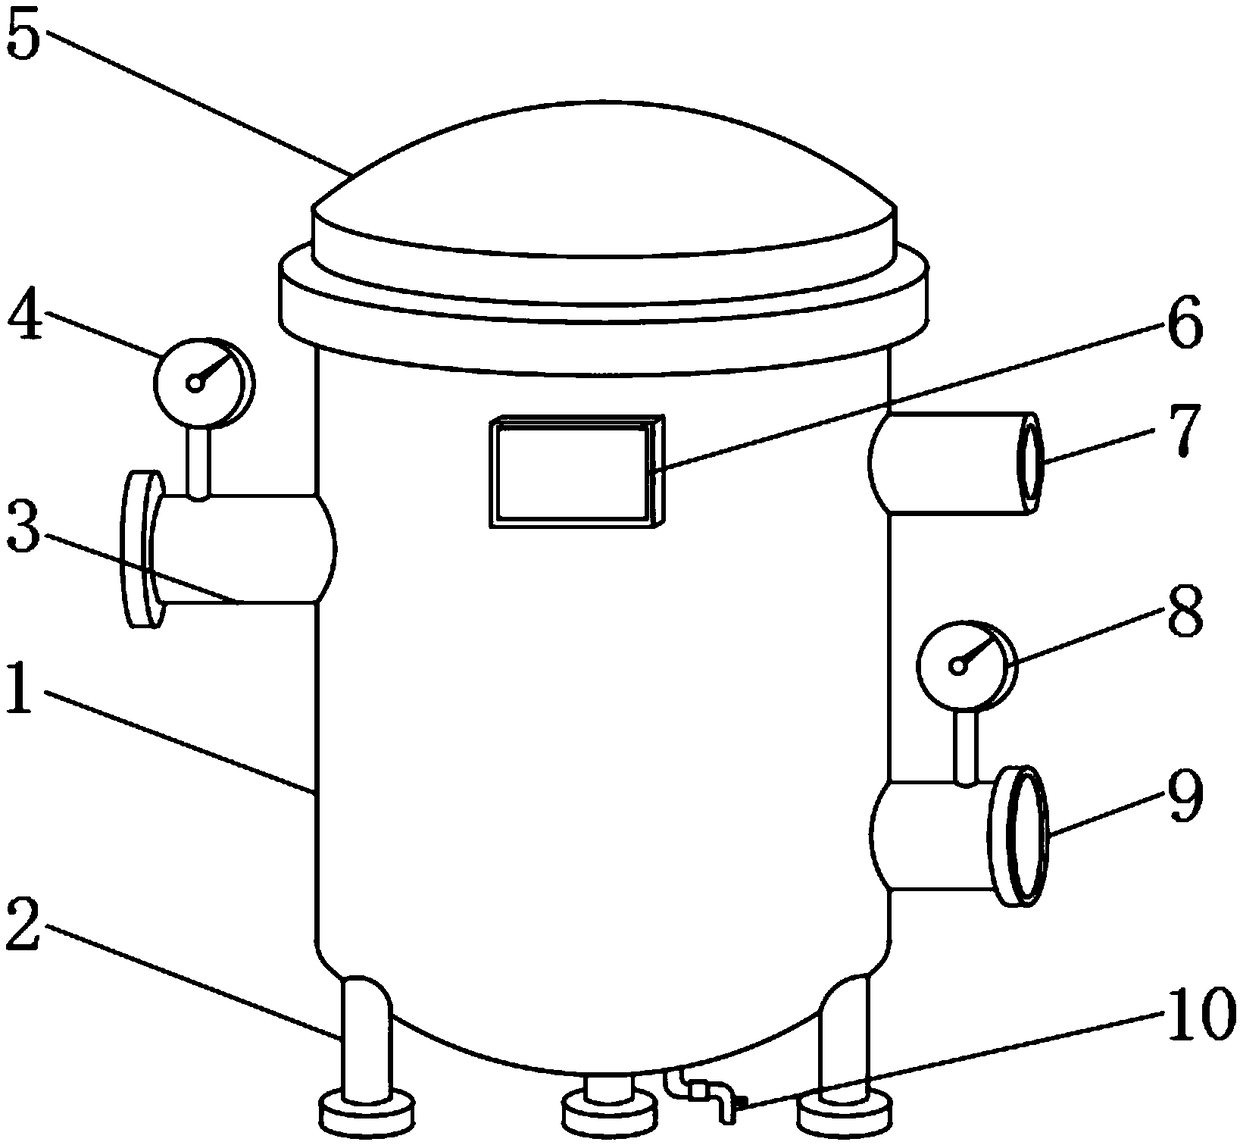 Chemical sewage filtering method